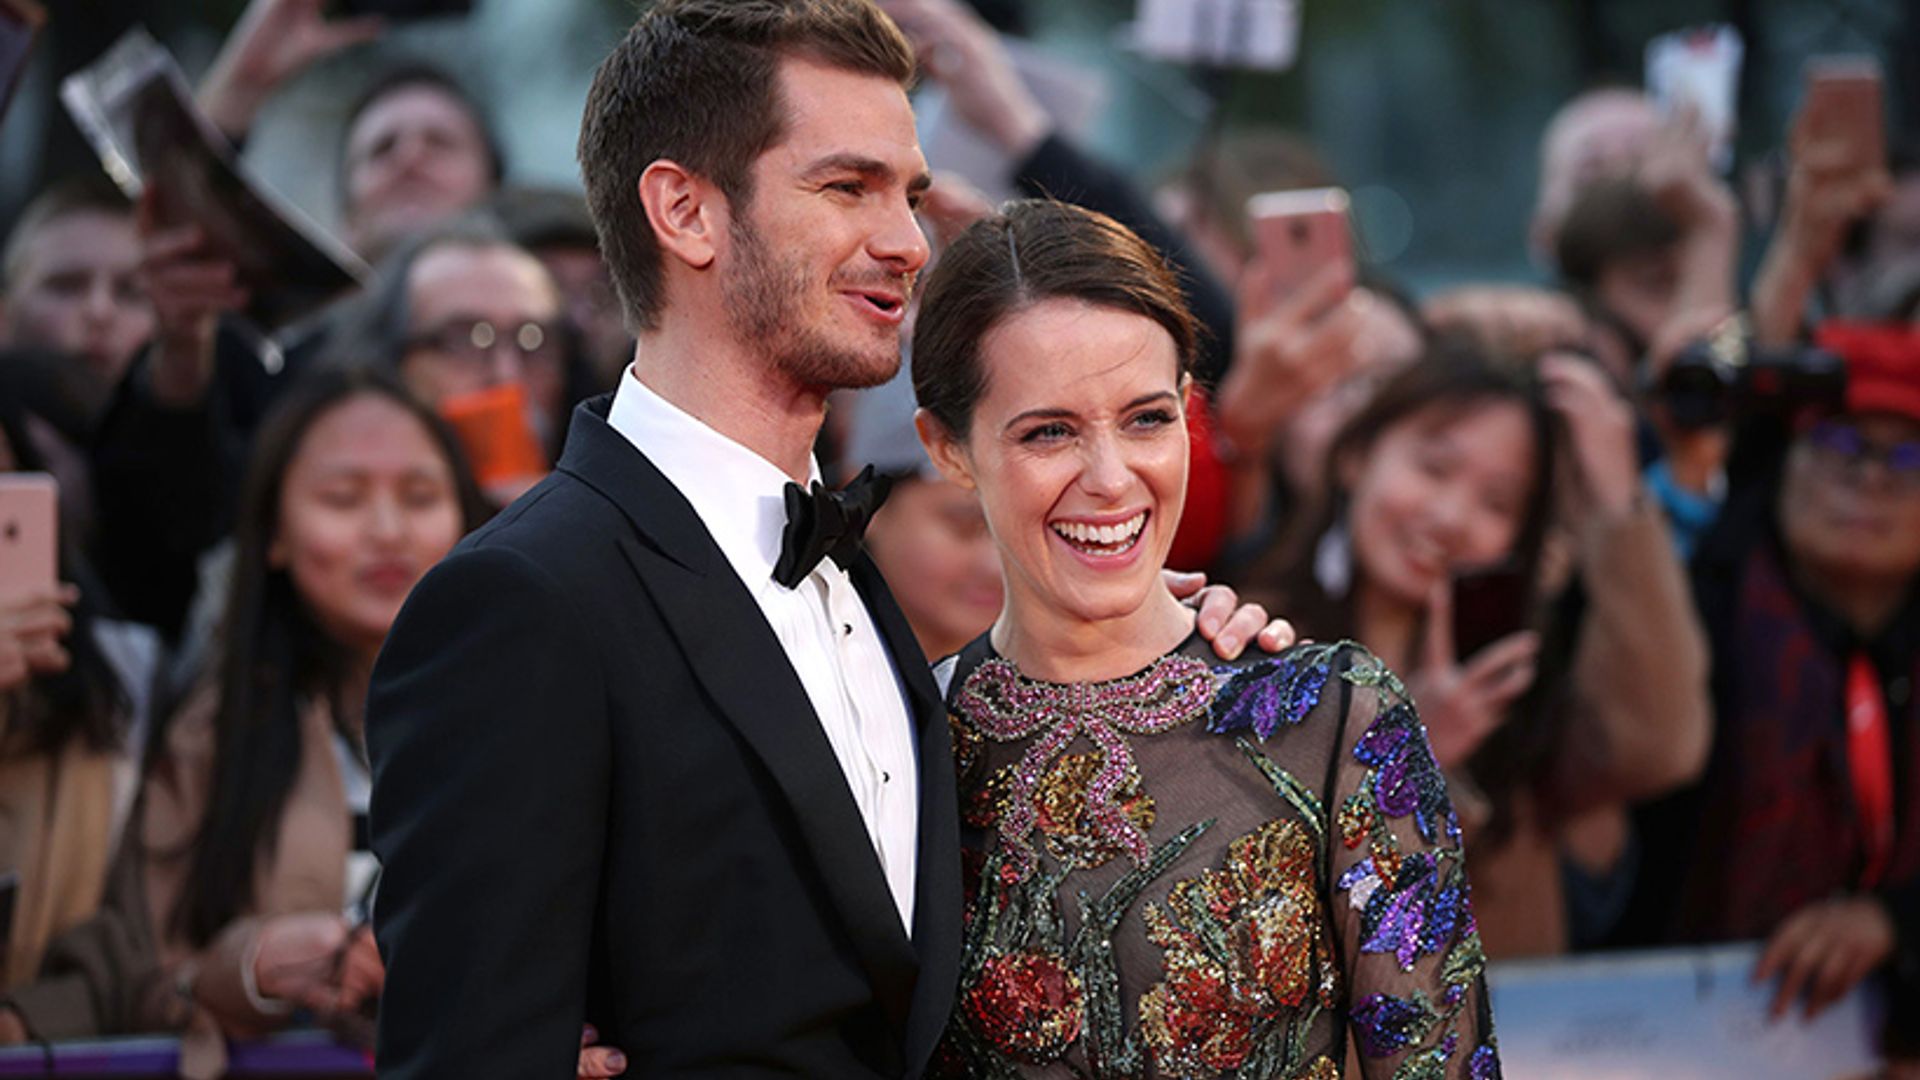 Andrew Garfield praises stunning Breathe co-star Claire Foy